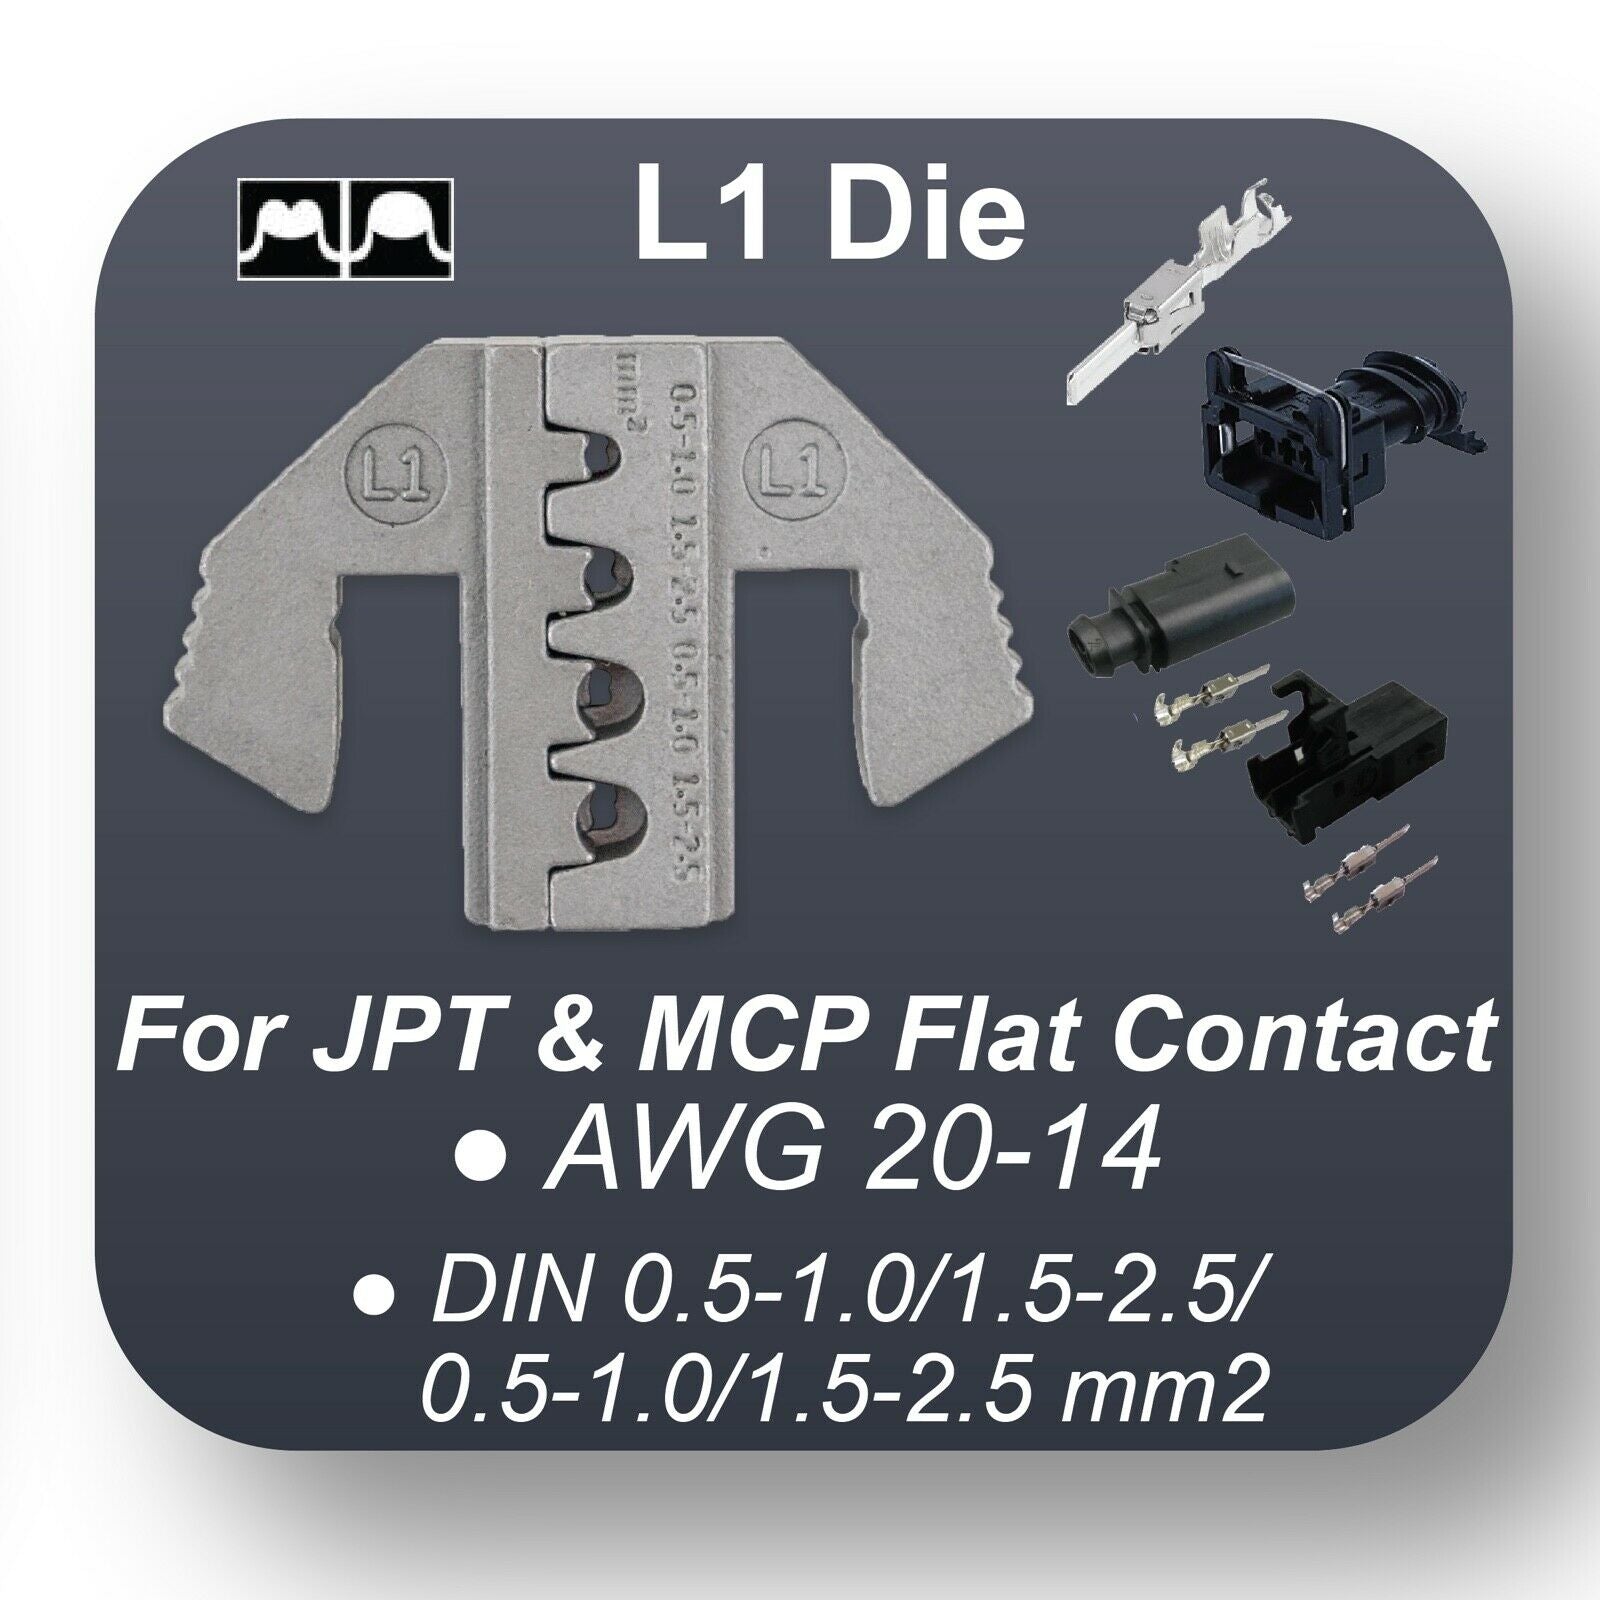 Crimping Tool Die - L1 Die for JCP & MCP Flat Terminals AWG 20-14